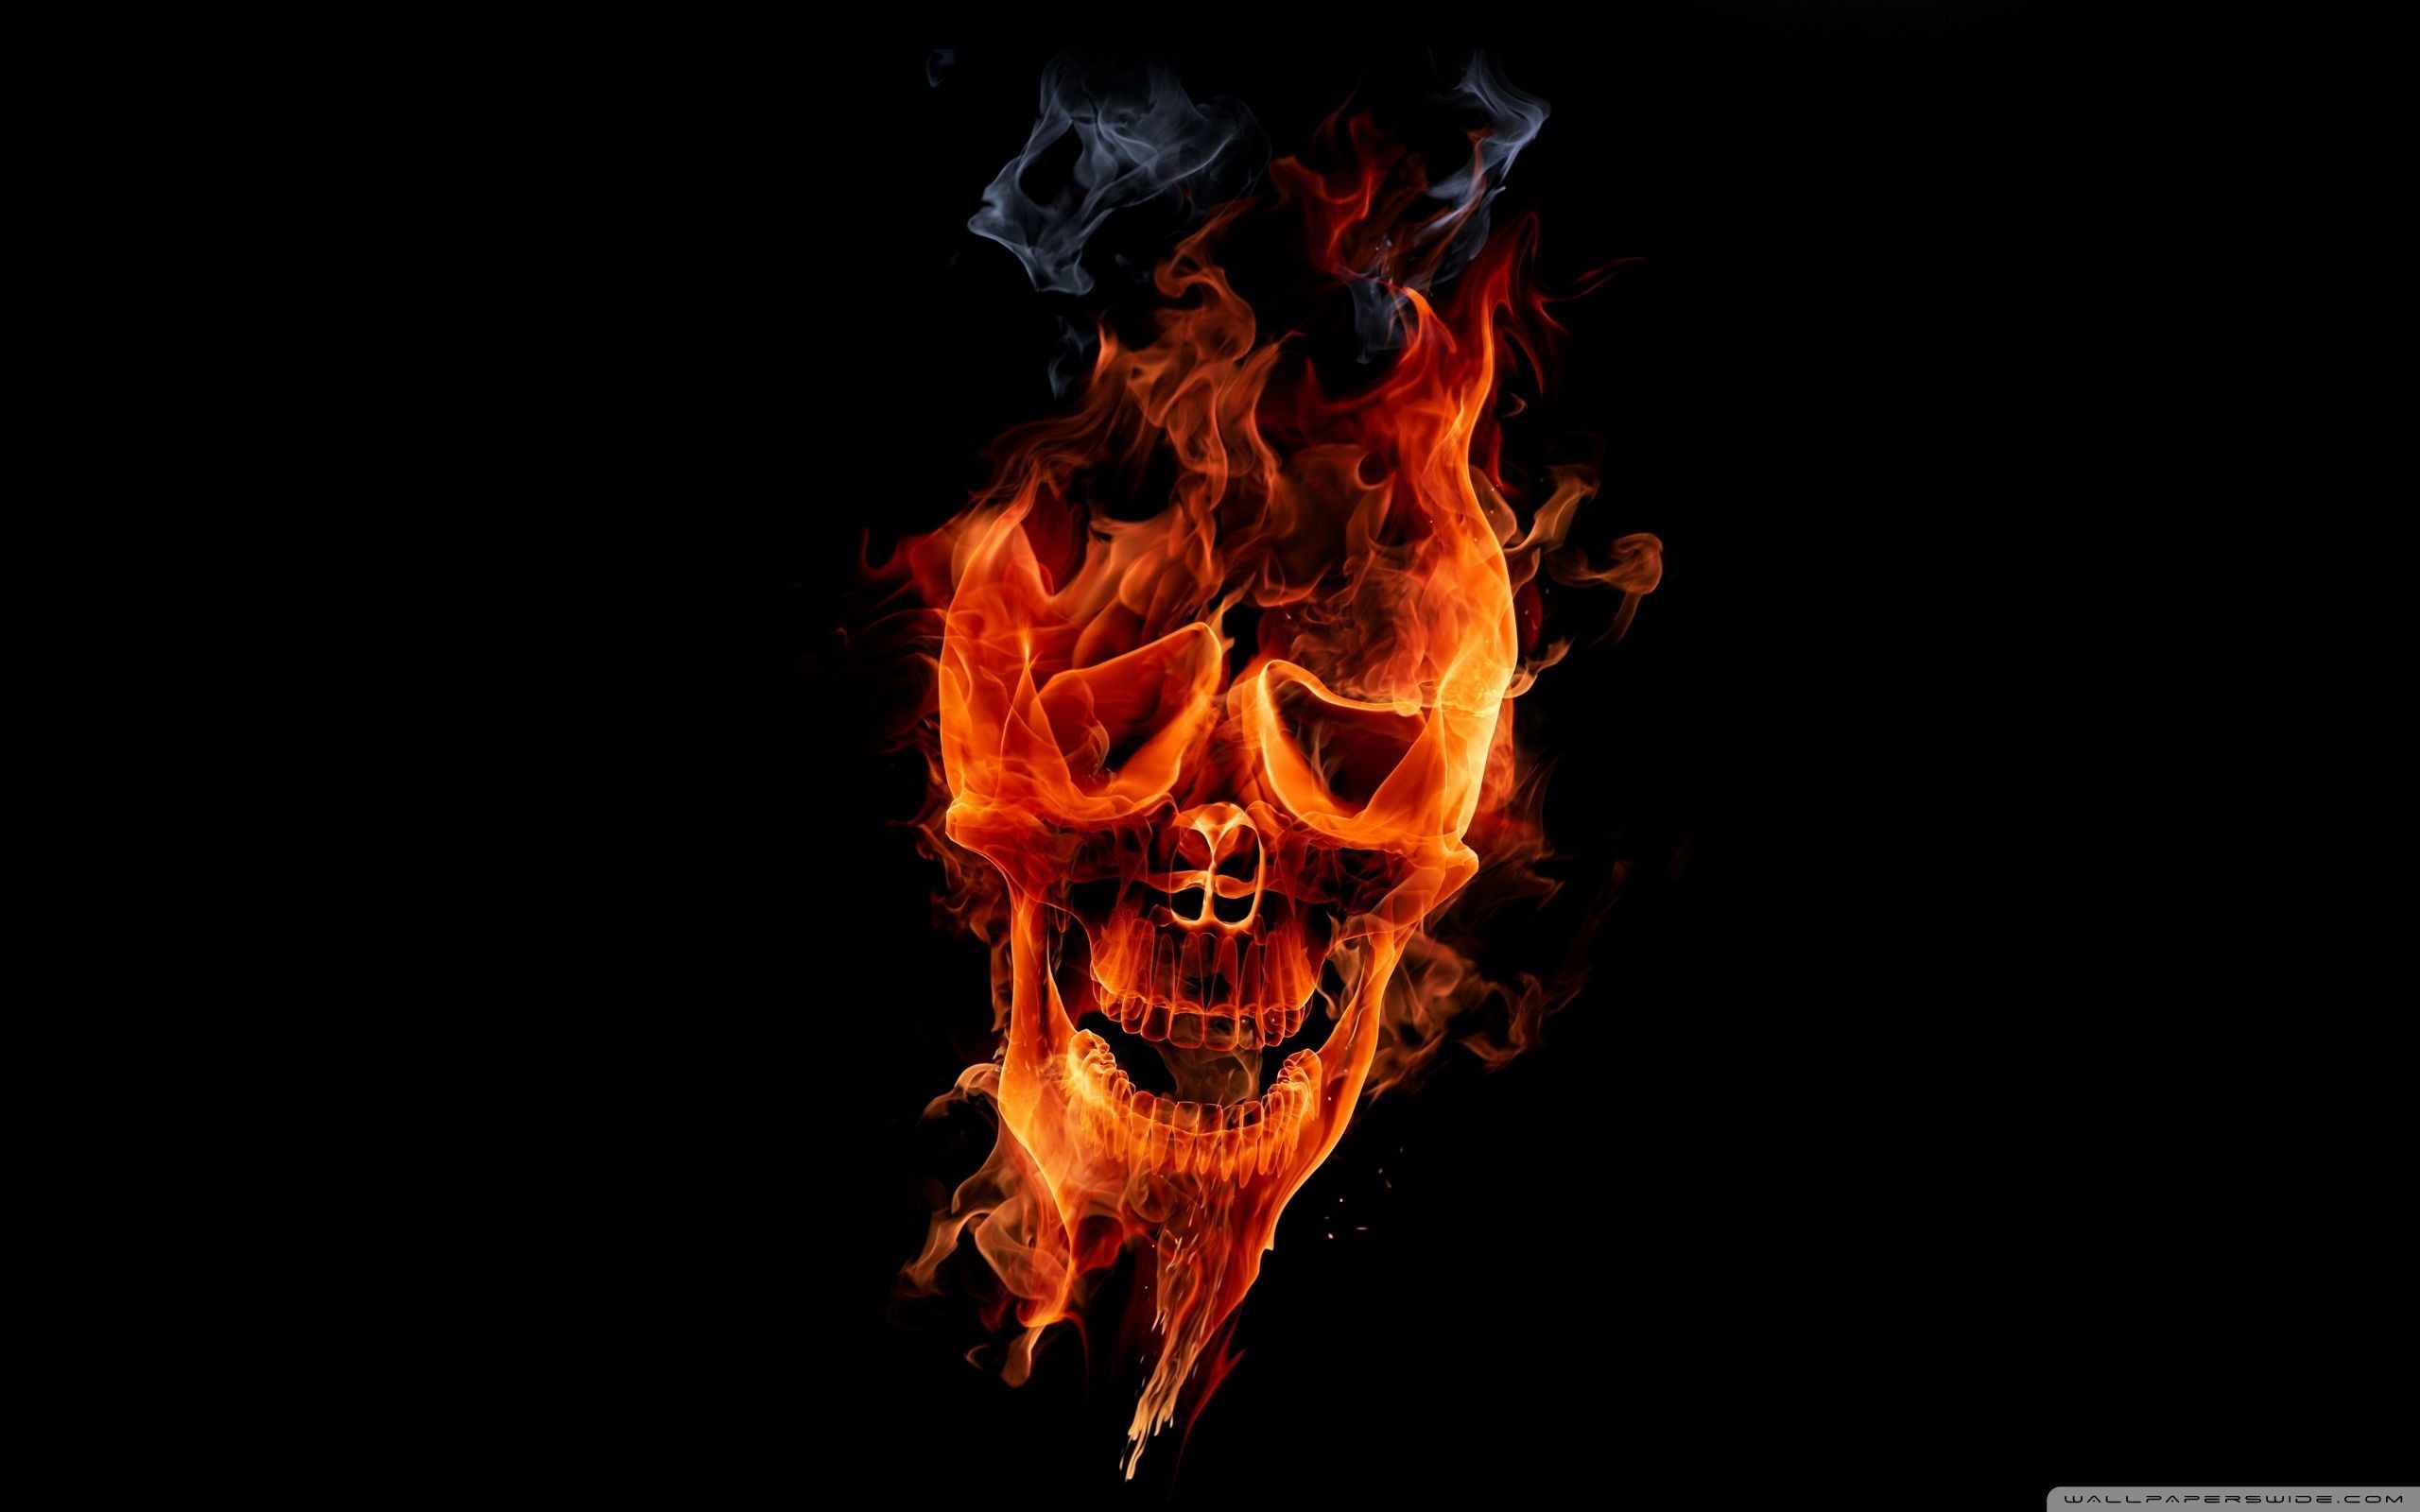 Fire Skull Wallpaper Full HD 2560×1600 – Free wallpaper full hd